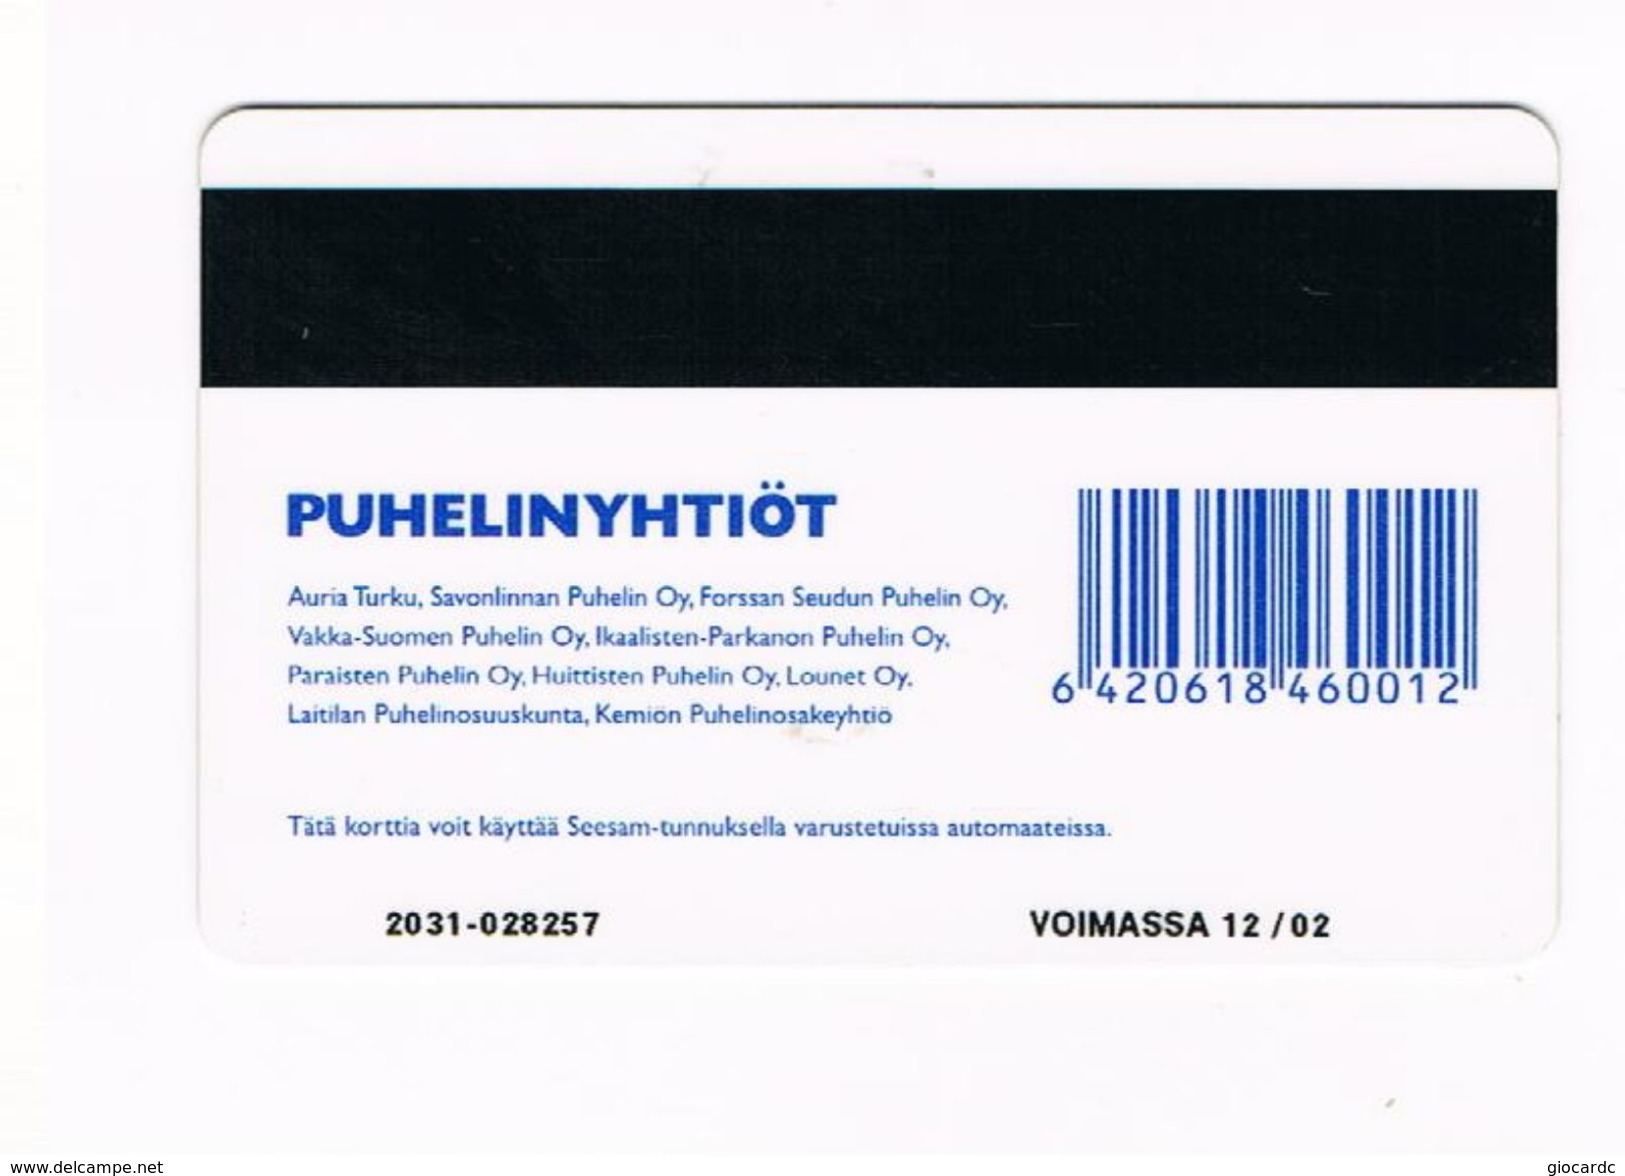 FINLANDIA (FINLAND) - TURUN PUHELIN (MAGNETIC) -  5 EURO BANKNOTE CODE 2031-028257 EXP.12.02 - USED  -  RIF. 9110 - Francobolli & Monete